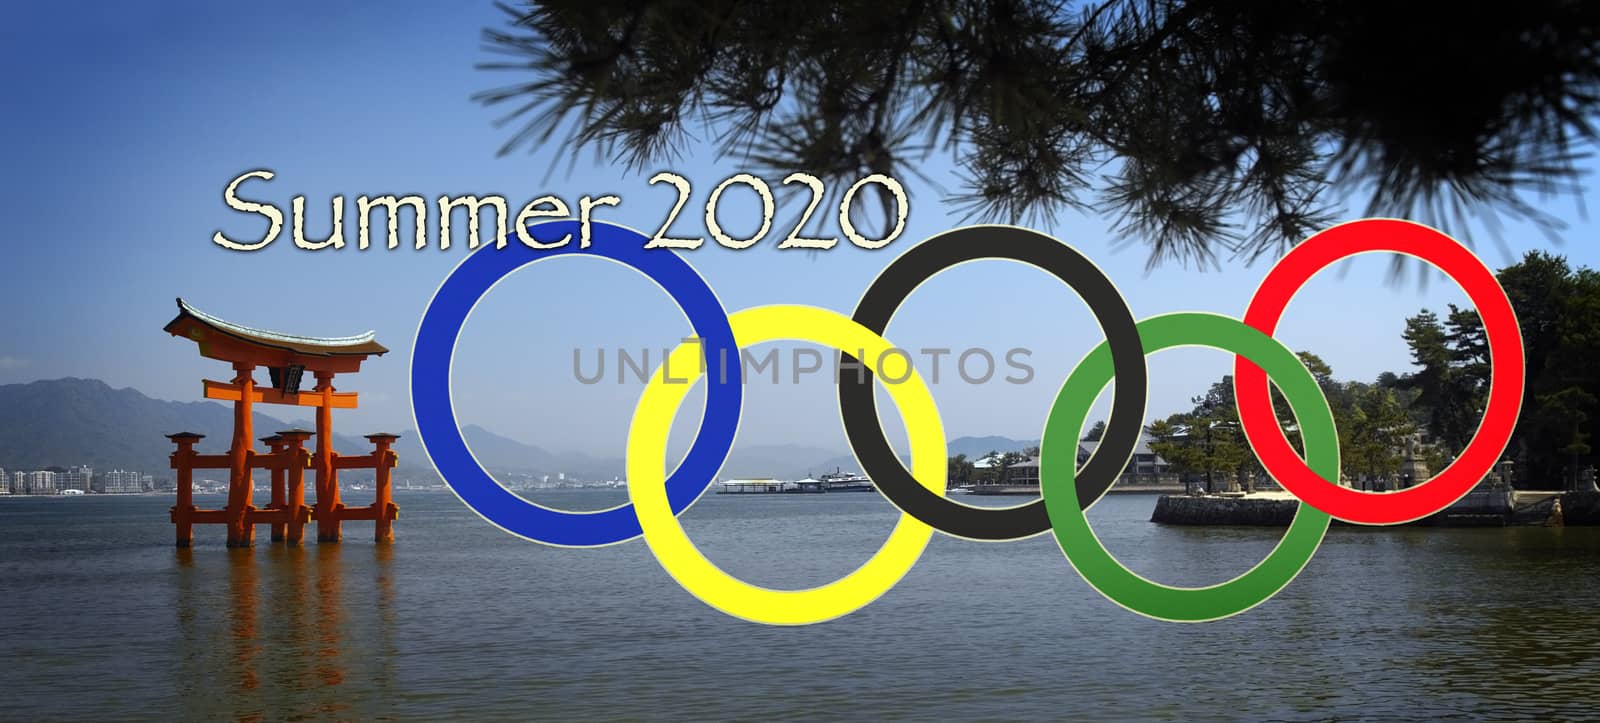 The 2020 Summer Olympics - Japan. Torii Gate at Itsukushima Shinto Shrine on Miyajima Island in Japan